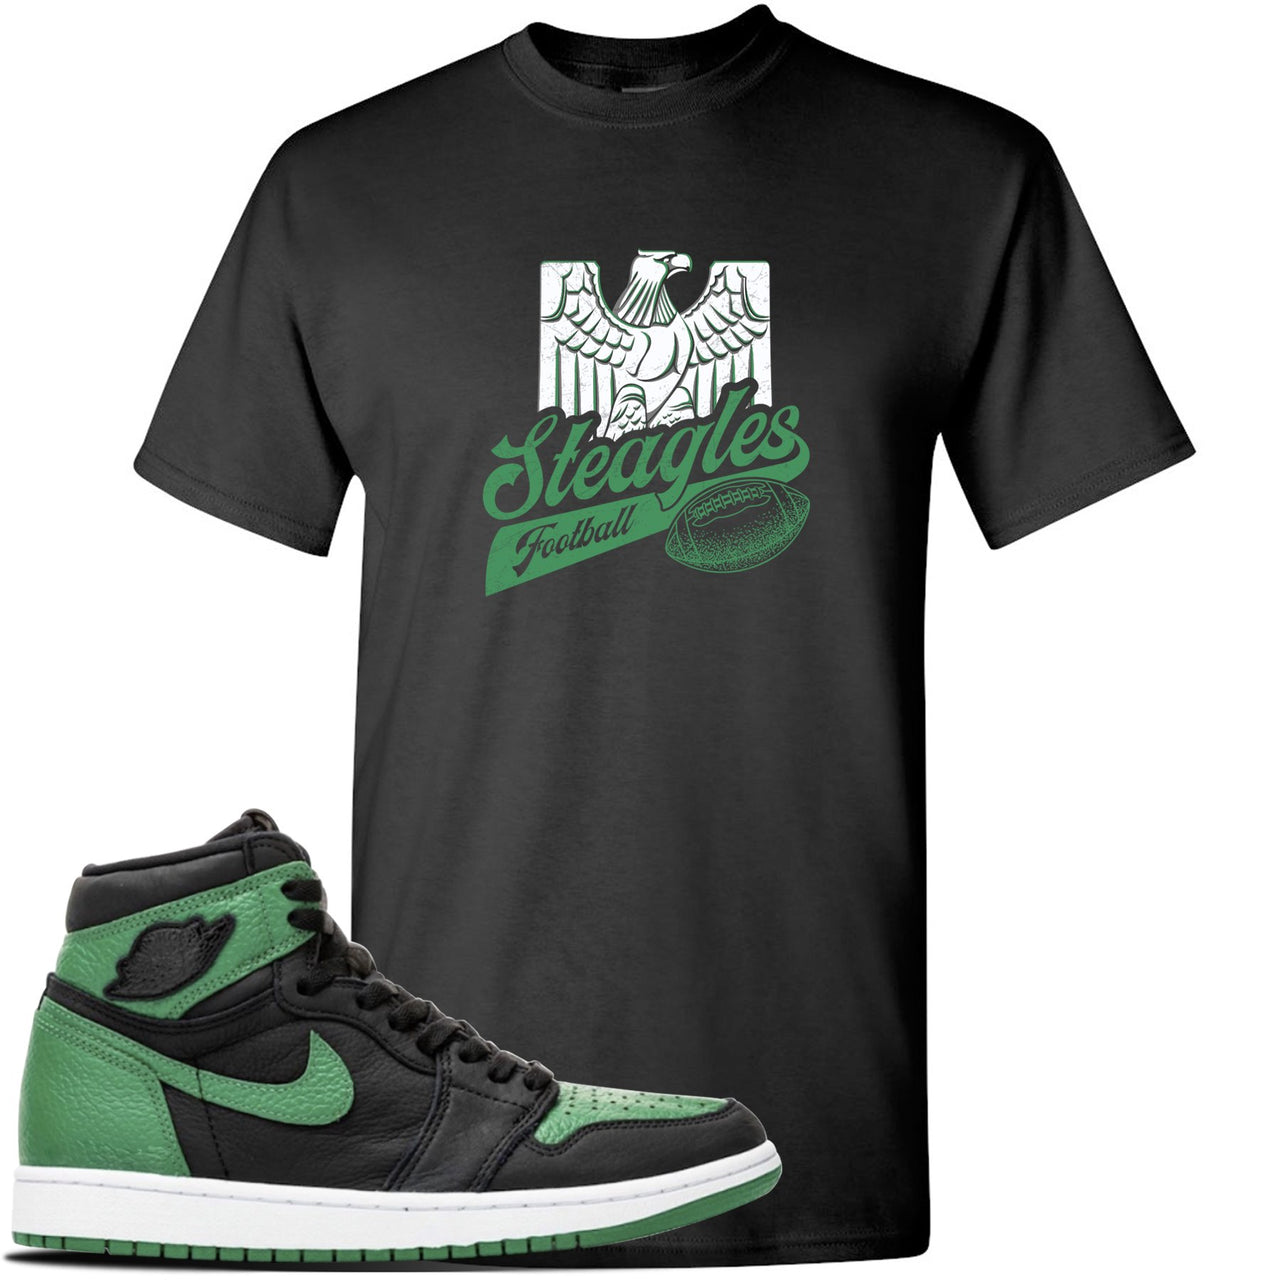 Jordan 1 Retro High OG Pine Green Gym Sneaker Black T Shirt | Tees to match Air Jordan 1 Retro High OG Pine Green Gym Shoes | Steagles